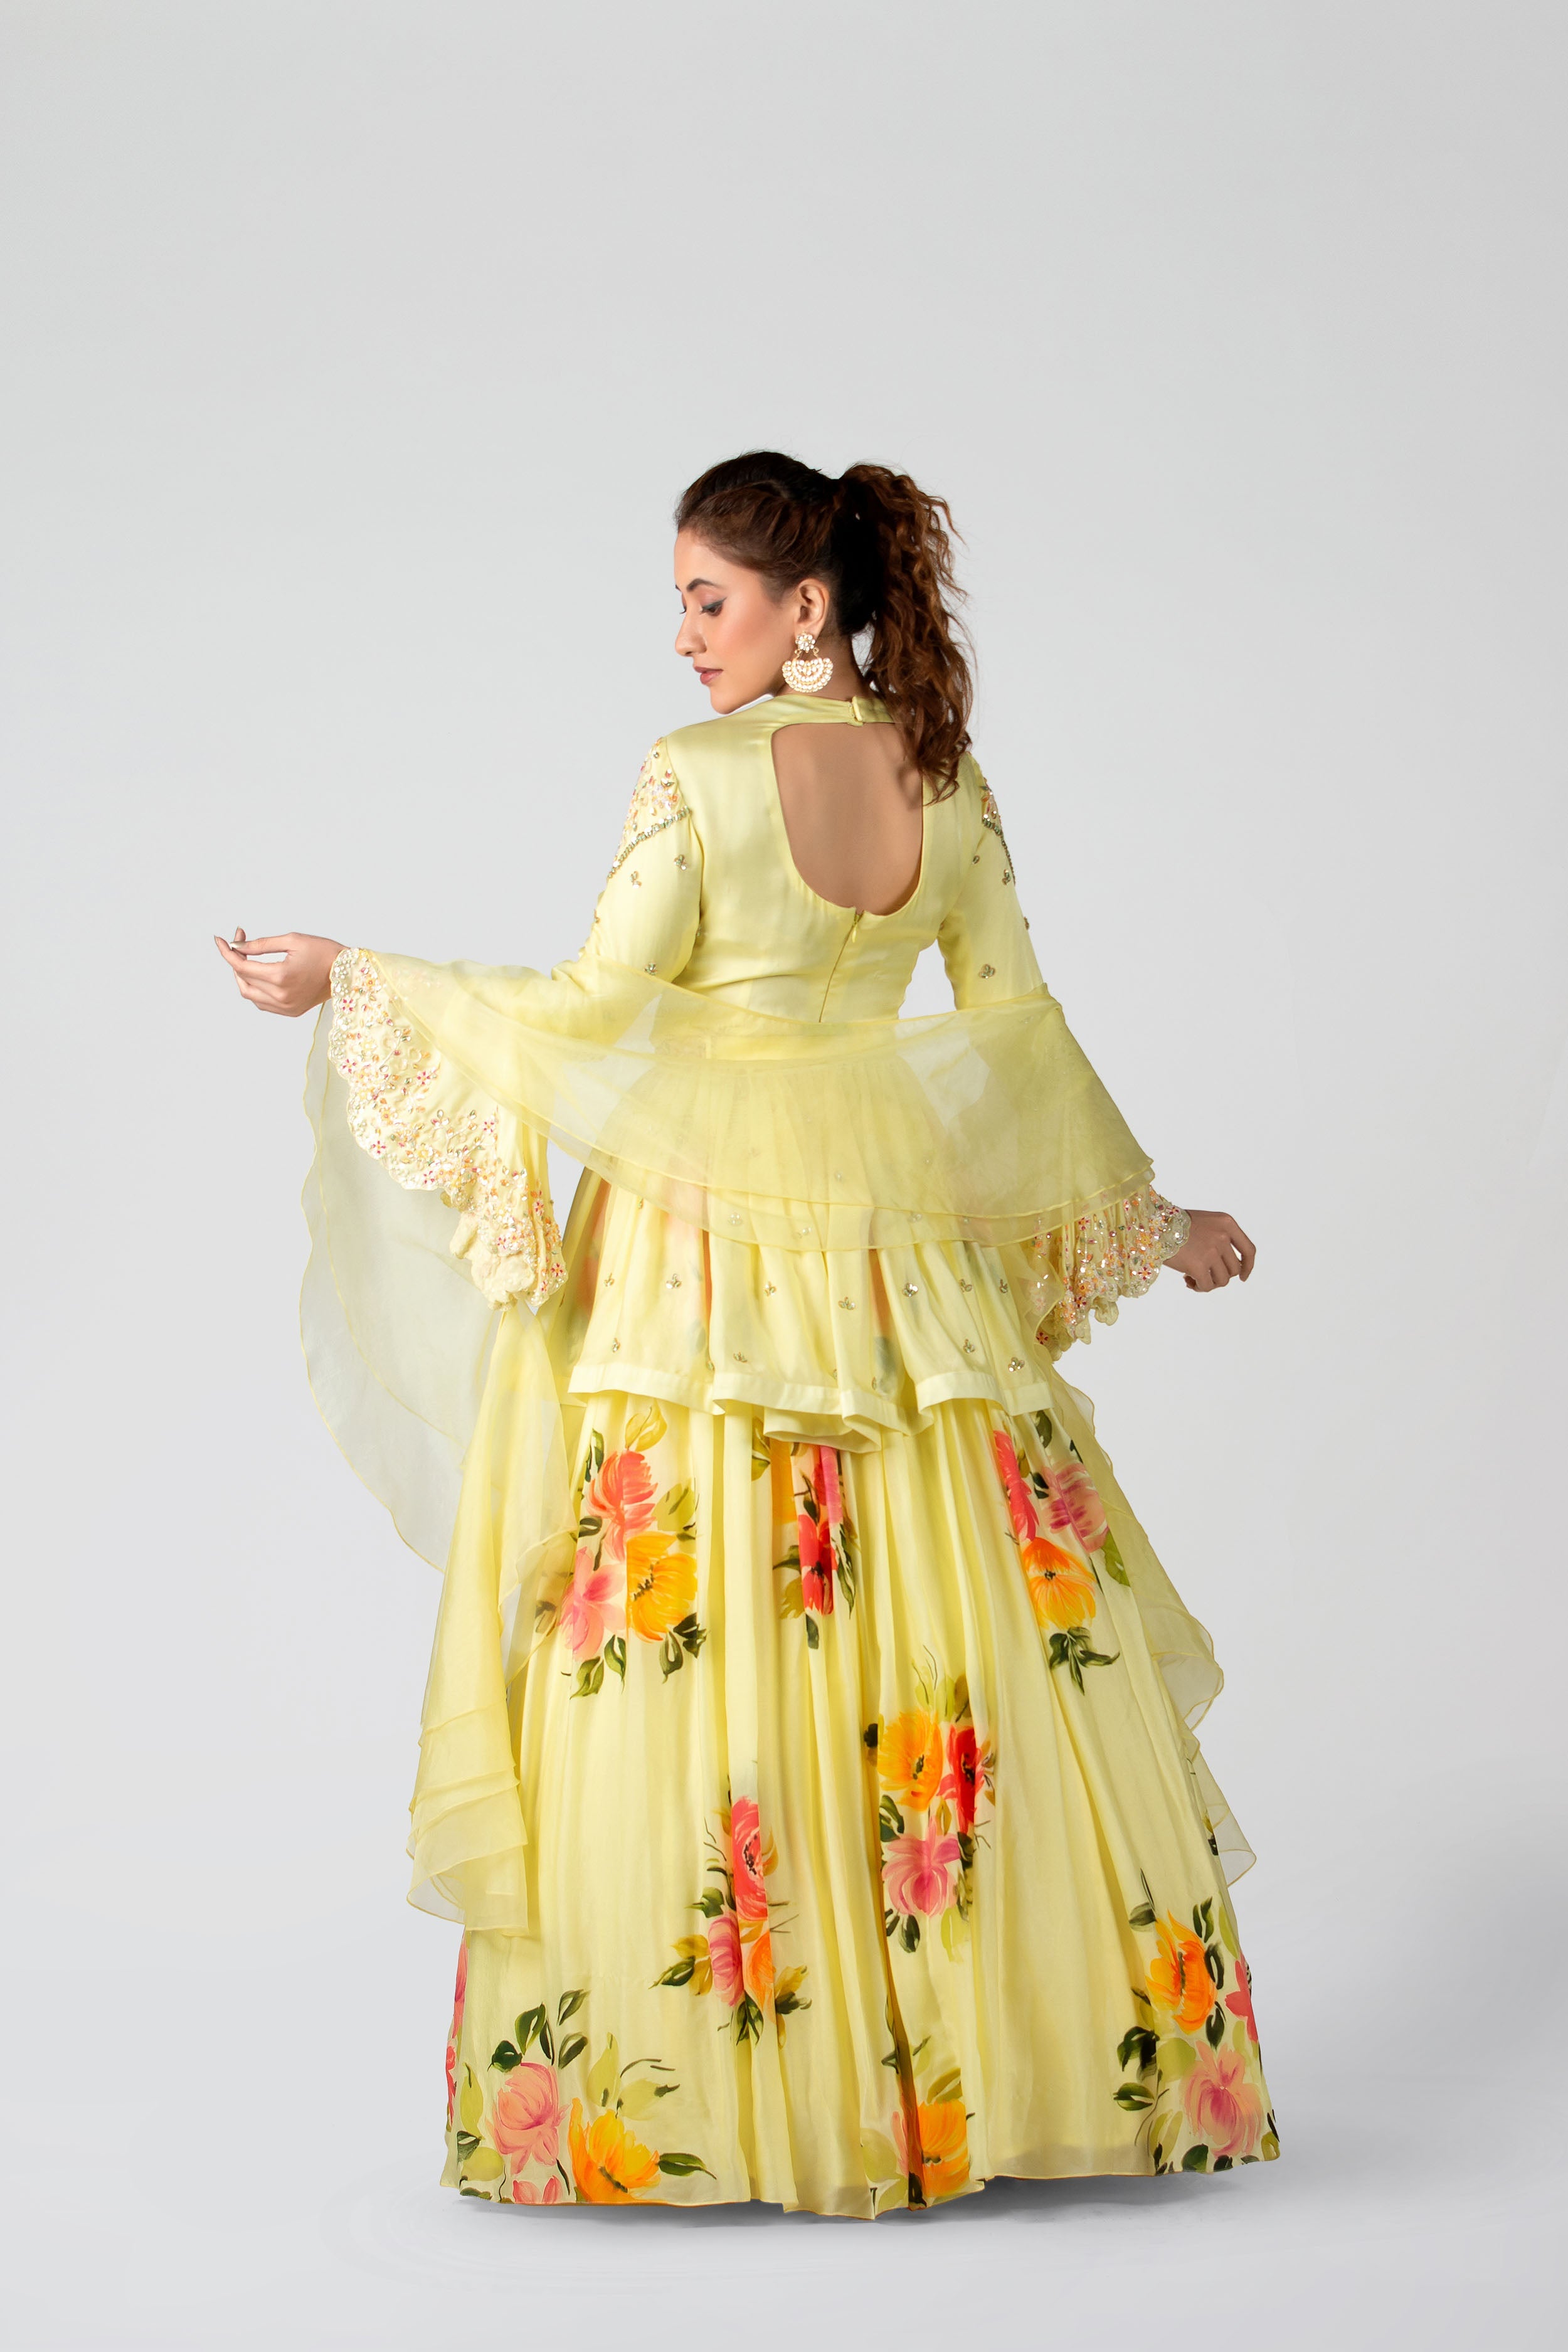 Suruchi Parakh - Pastel Yellow Hand-Painted Pleated Skirt Set